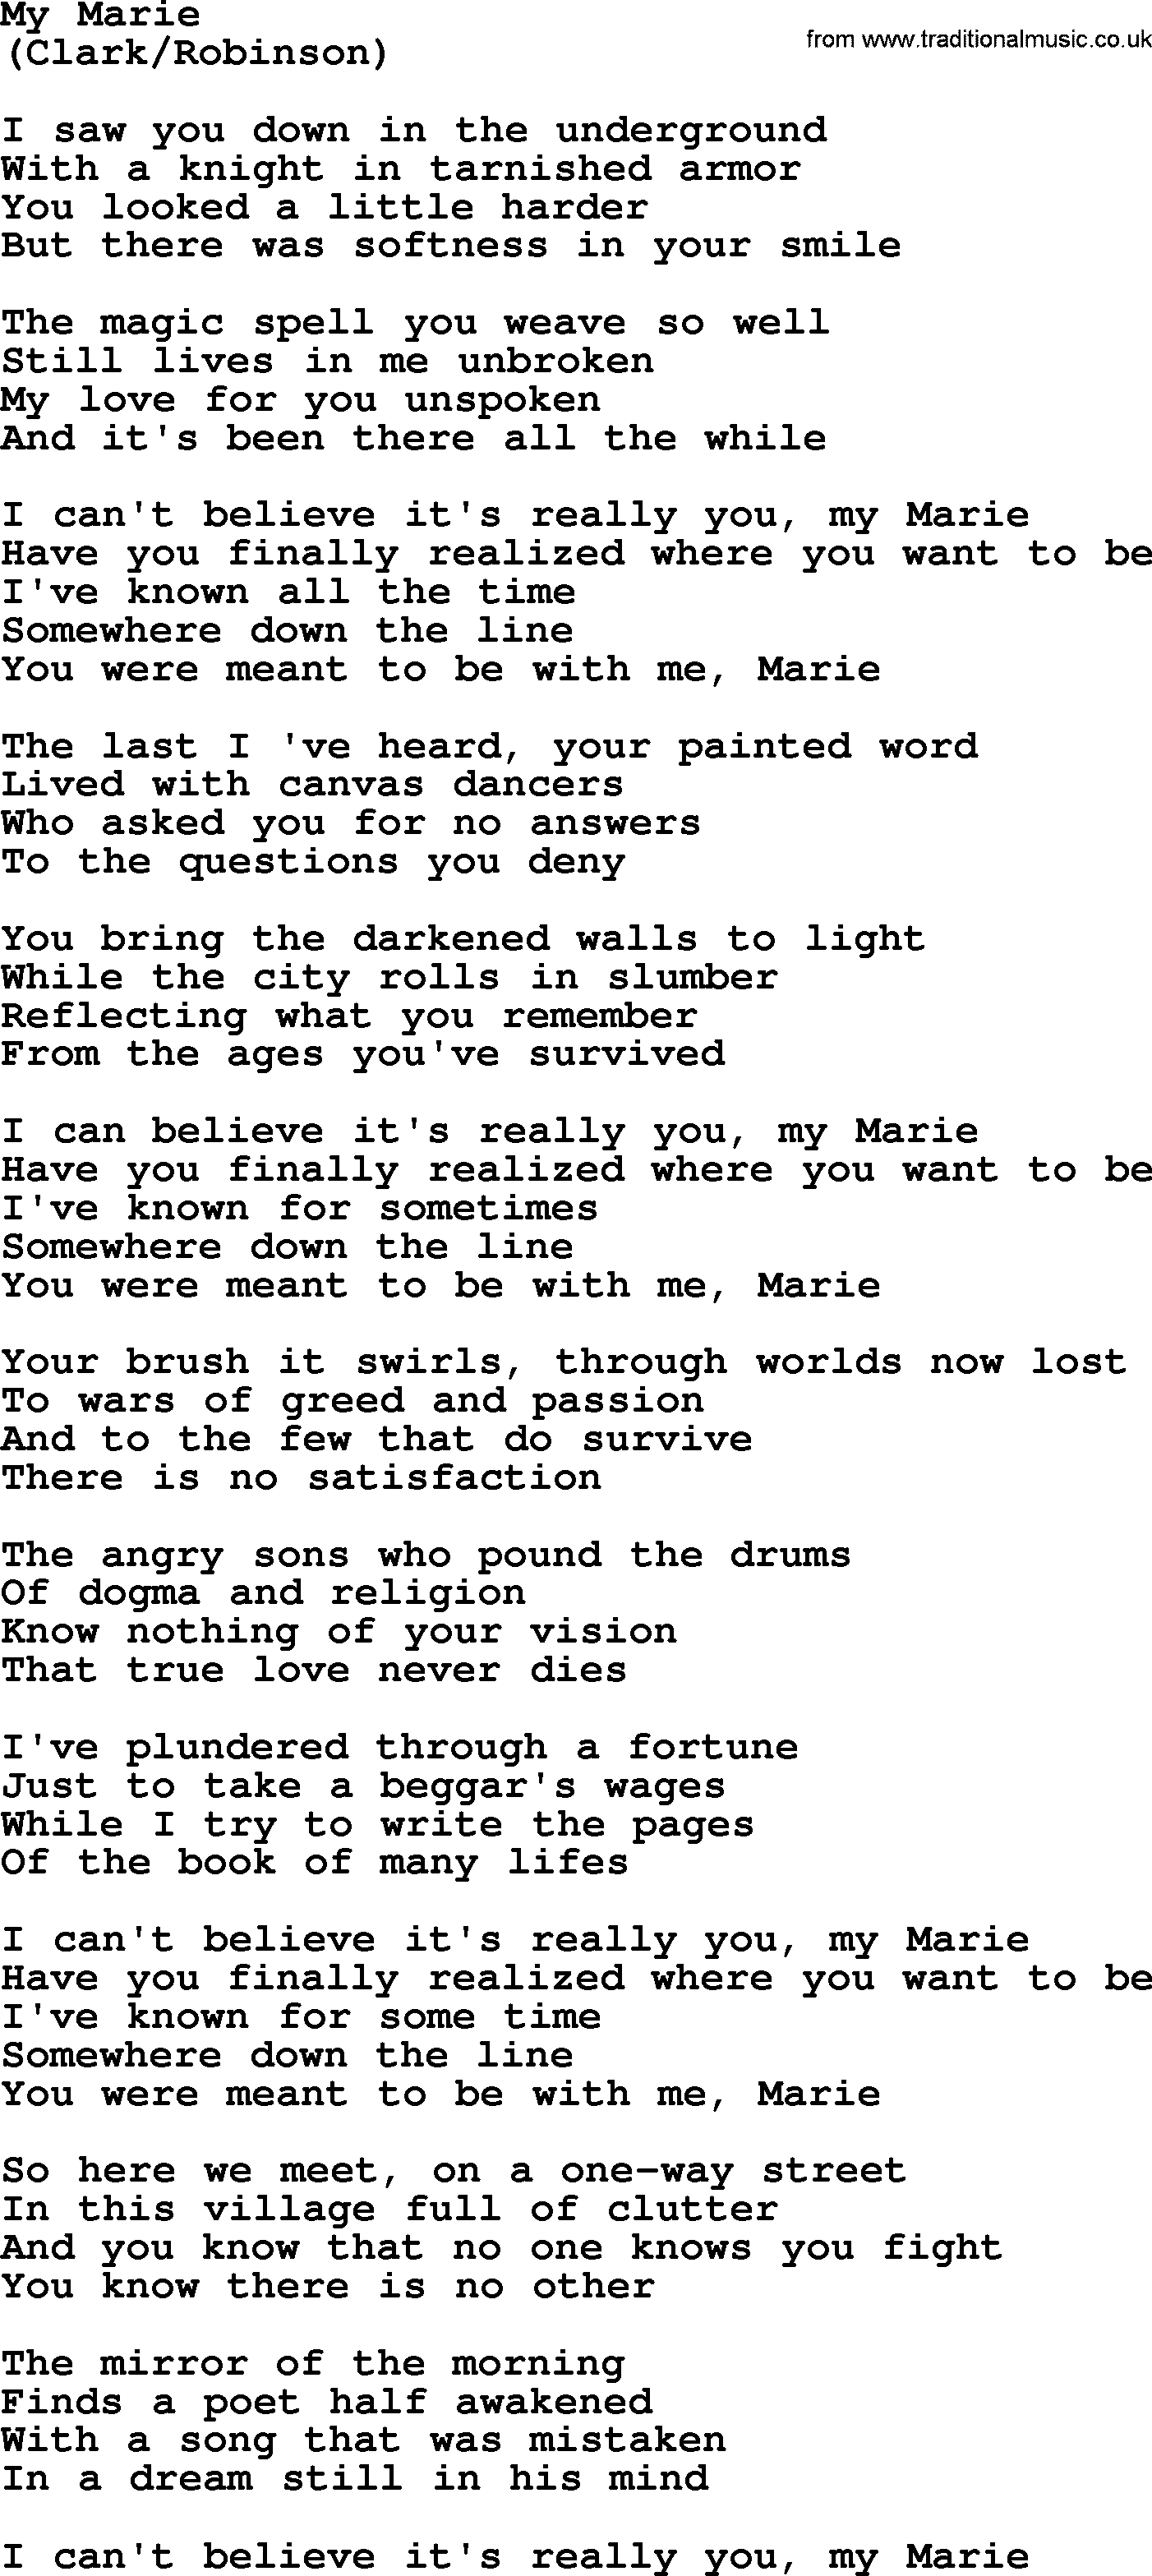 The Byrds song My Marie, lyrics